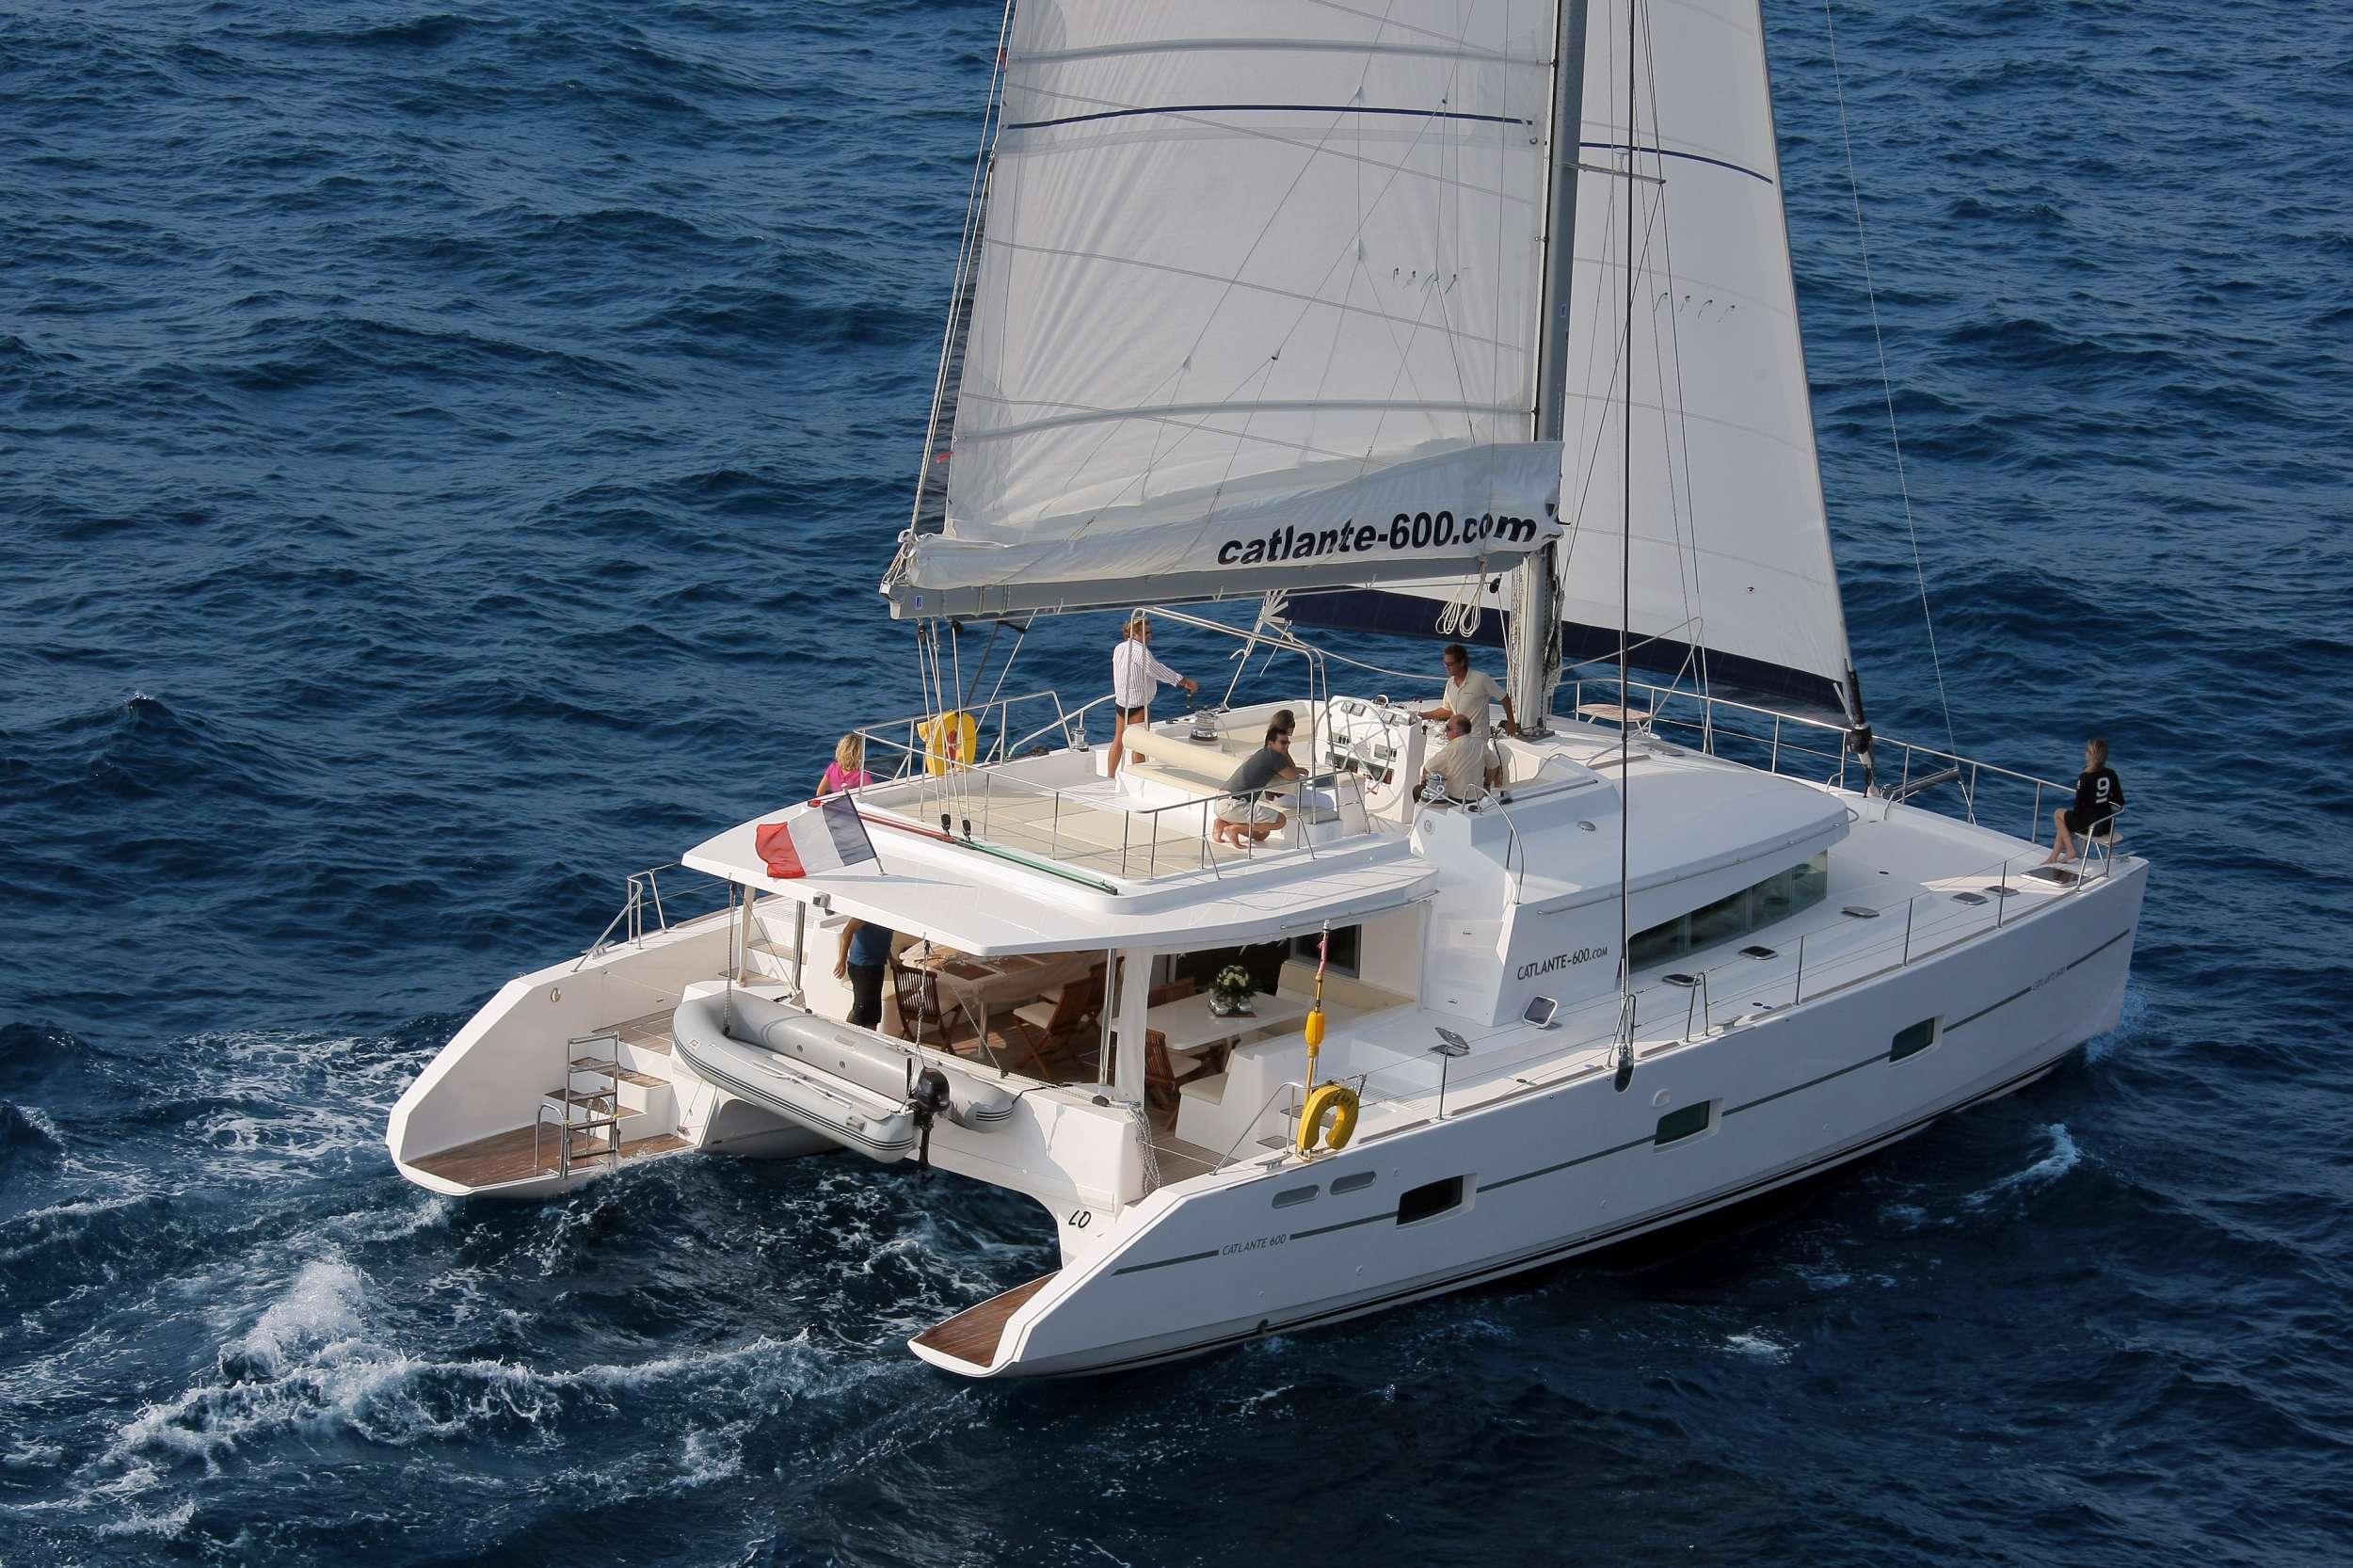 Dream 60 - Littr&eacute; &amp; Tauceti - Yacht Charter Koh Samui & Boat hire in W. Med -Naples/Sicily, W. Med - Spain/Balearics, Croatia Bahamas, Indian Ocean and SE Asia 5